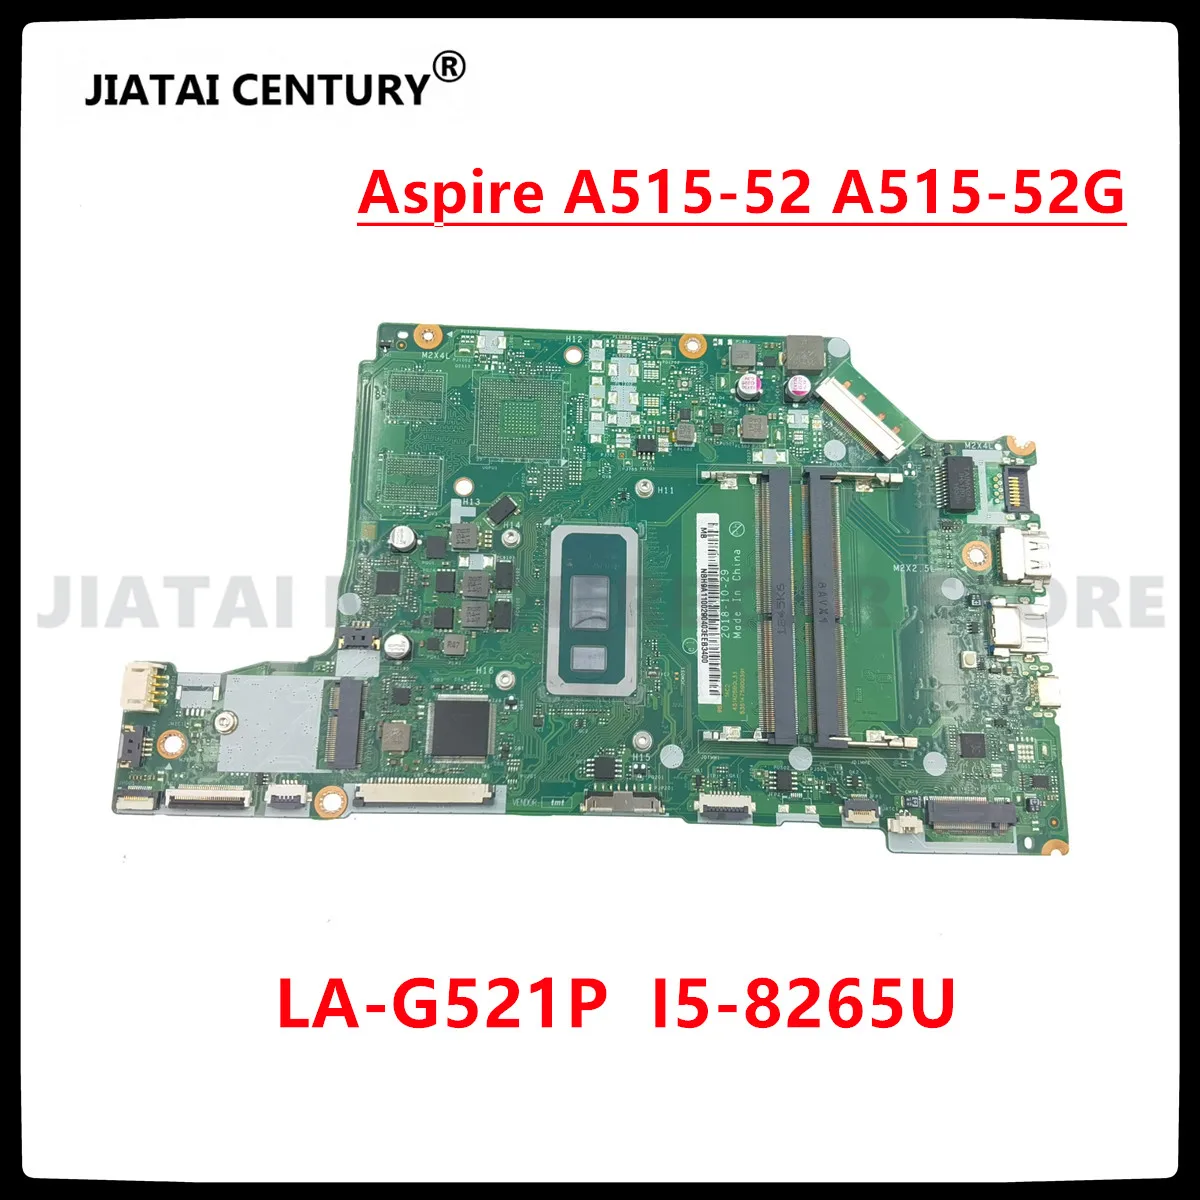 

LA-G521P for Acer Aspire 5 A515-52 A515-52G Mainboard Motherboard CPU I5-8265U SREJP EH5AW NBH1611003 Works Test Ok